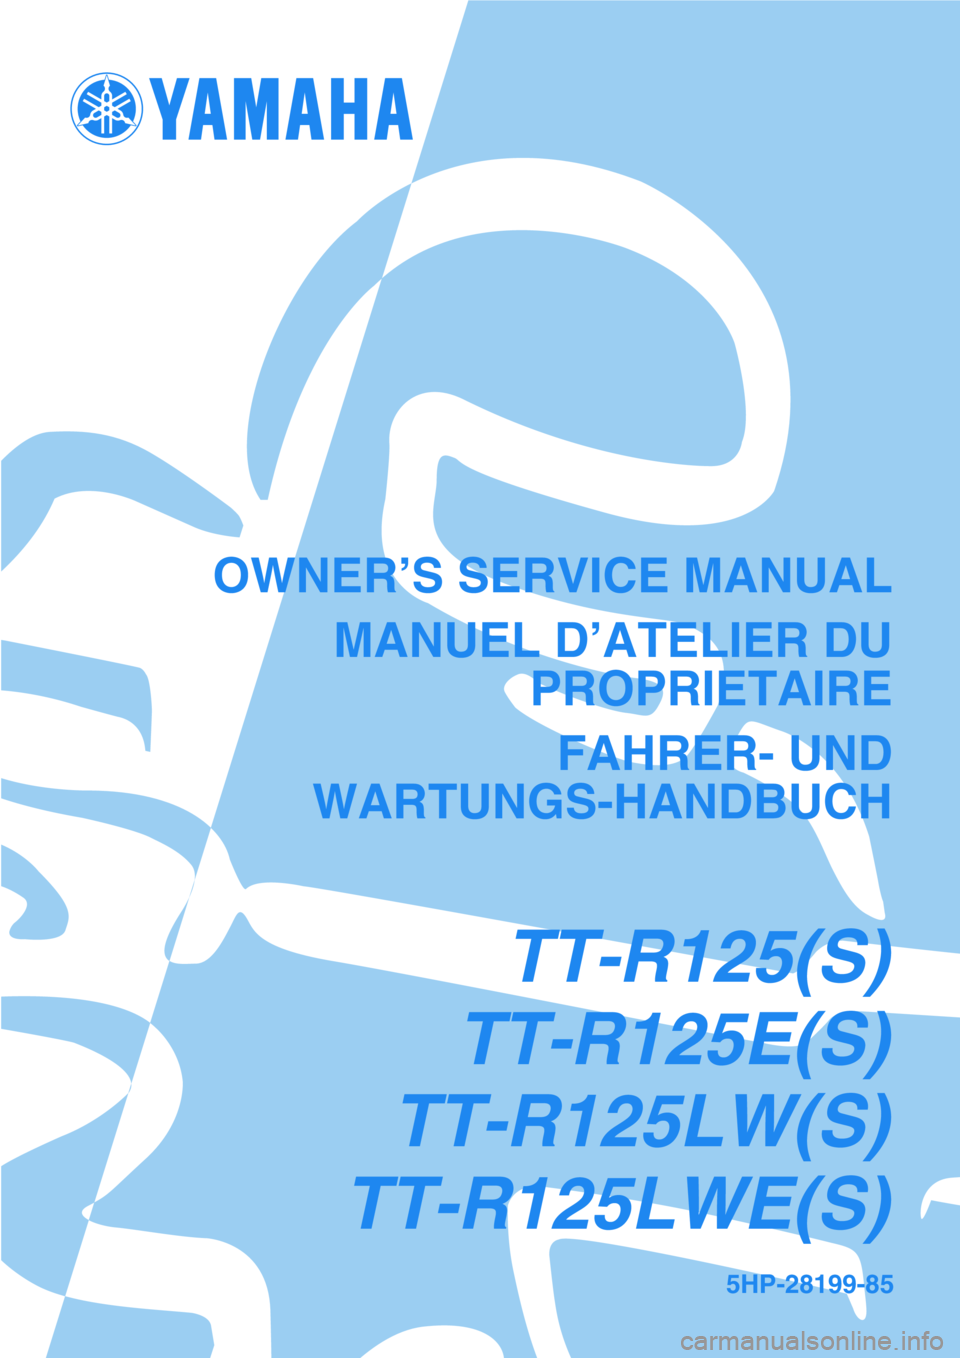 YAMAHA TTR125 2004  Notices Demploi (in French) 5HP-28199-85
OWNER’S SERVICE MANUAL
MANUEL D’ATELIER DU
PROPRIETAIRE
FAHRER- UND
WARTUNGS-HANDBUCH
TT-R125(S)
TT-R125E(S)
TT-R125LW(S)
TT-R125LWE(S) 